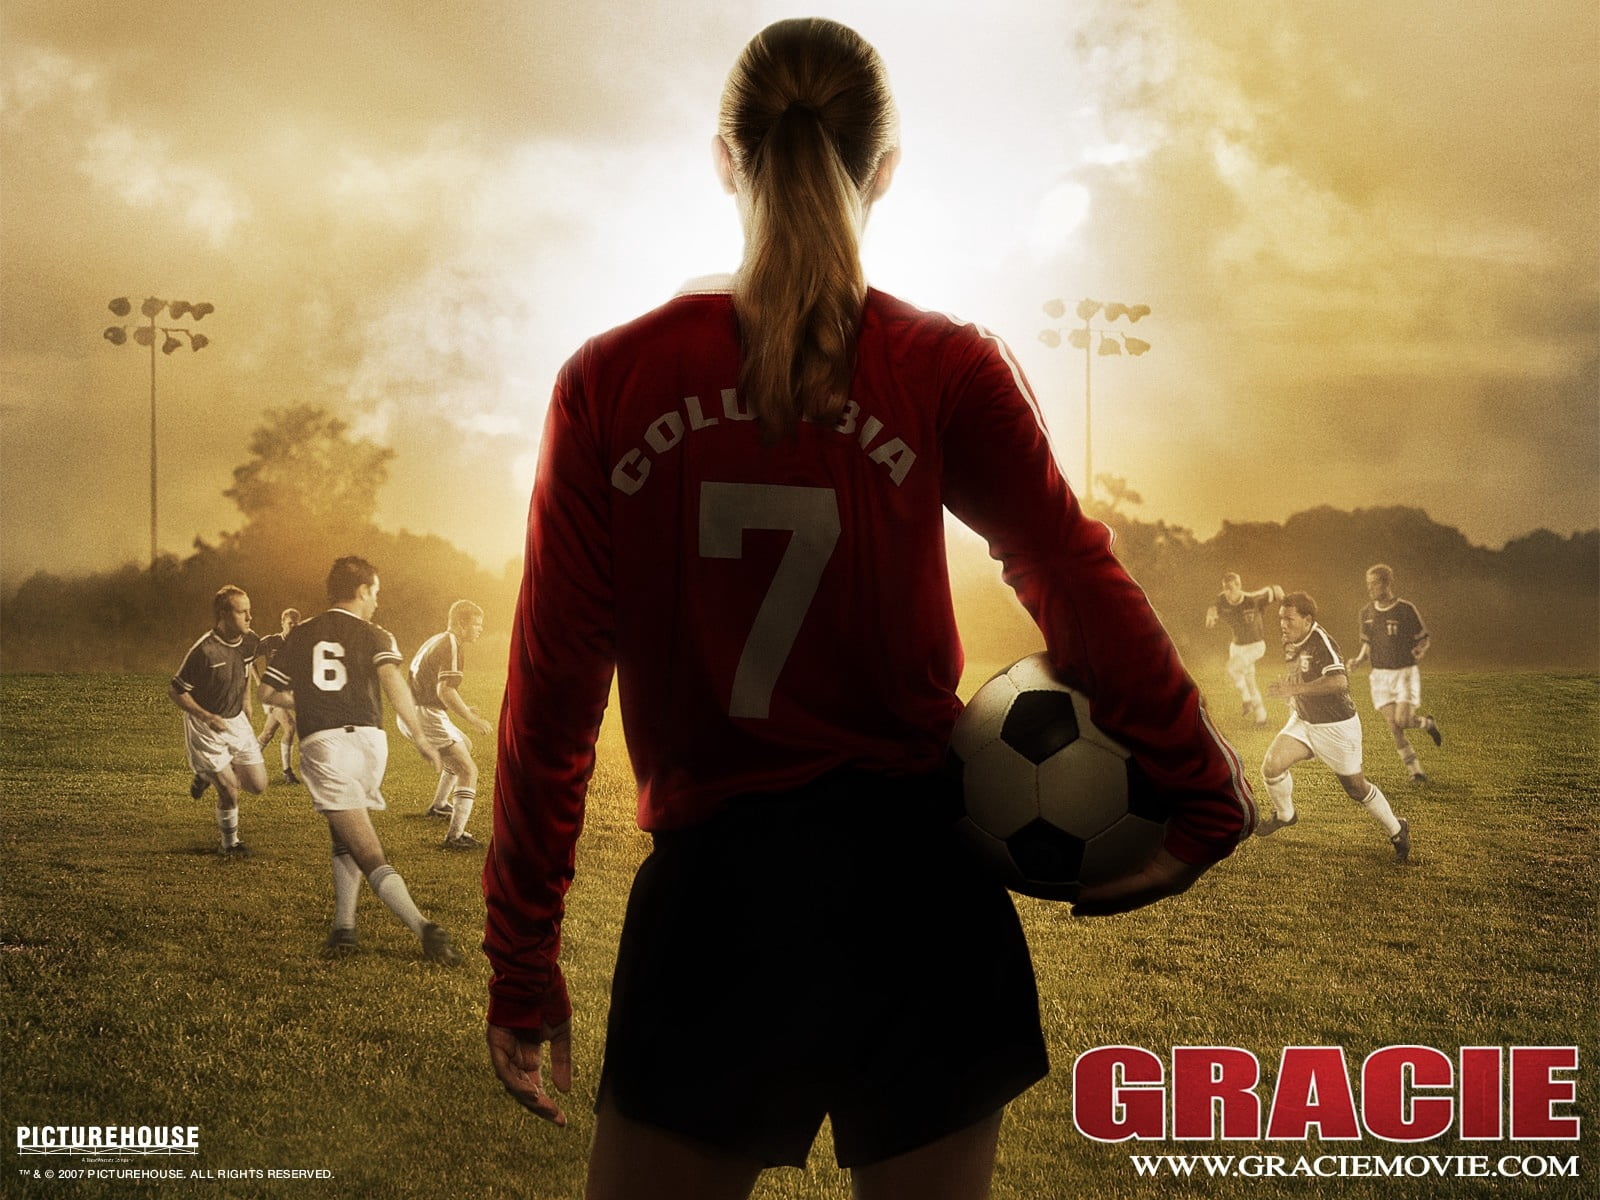 Gracie wallpaper, footballer, girl, soccer, sport, sports Uniform